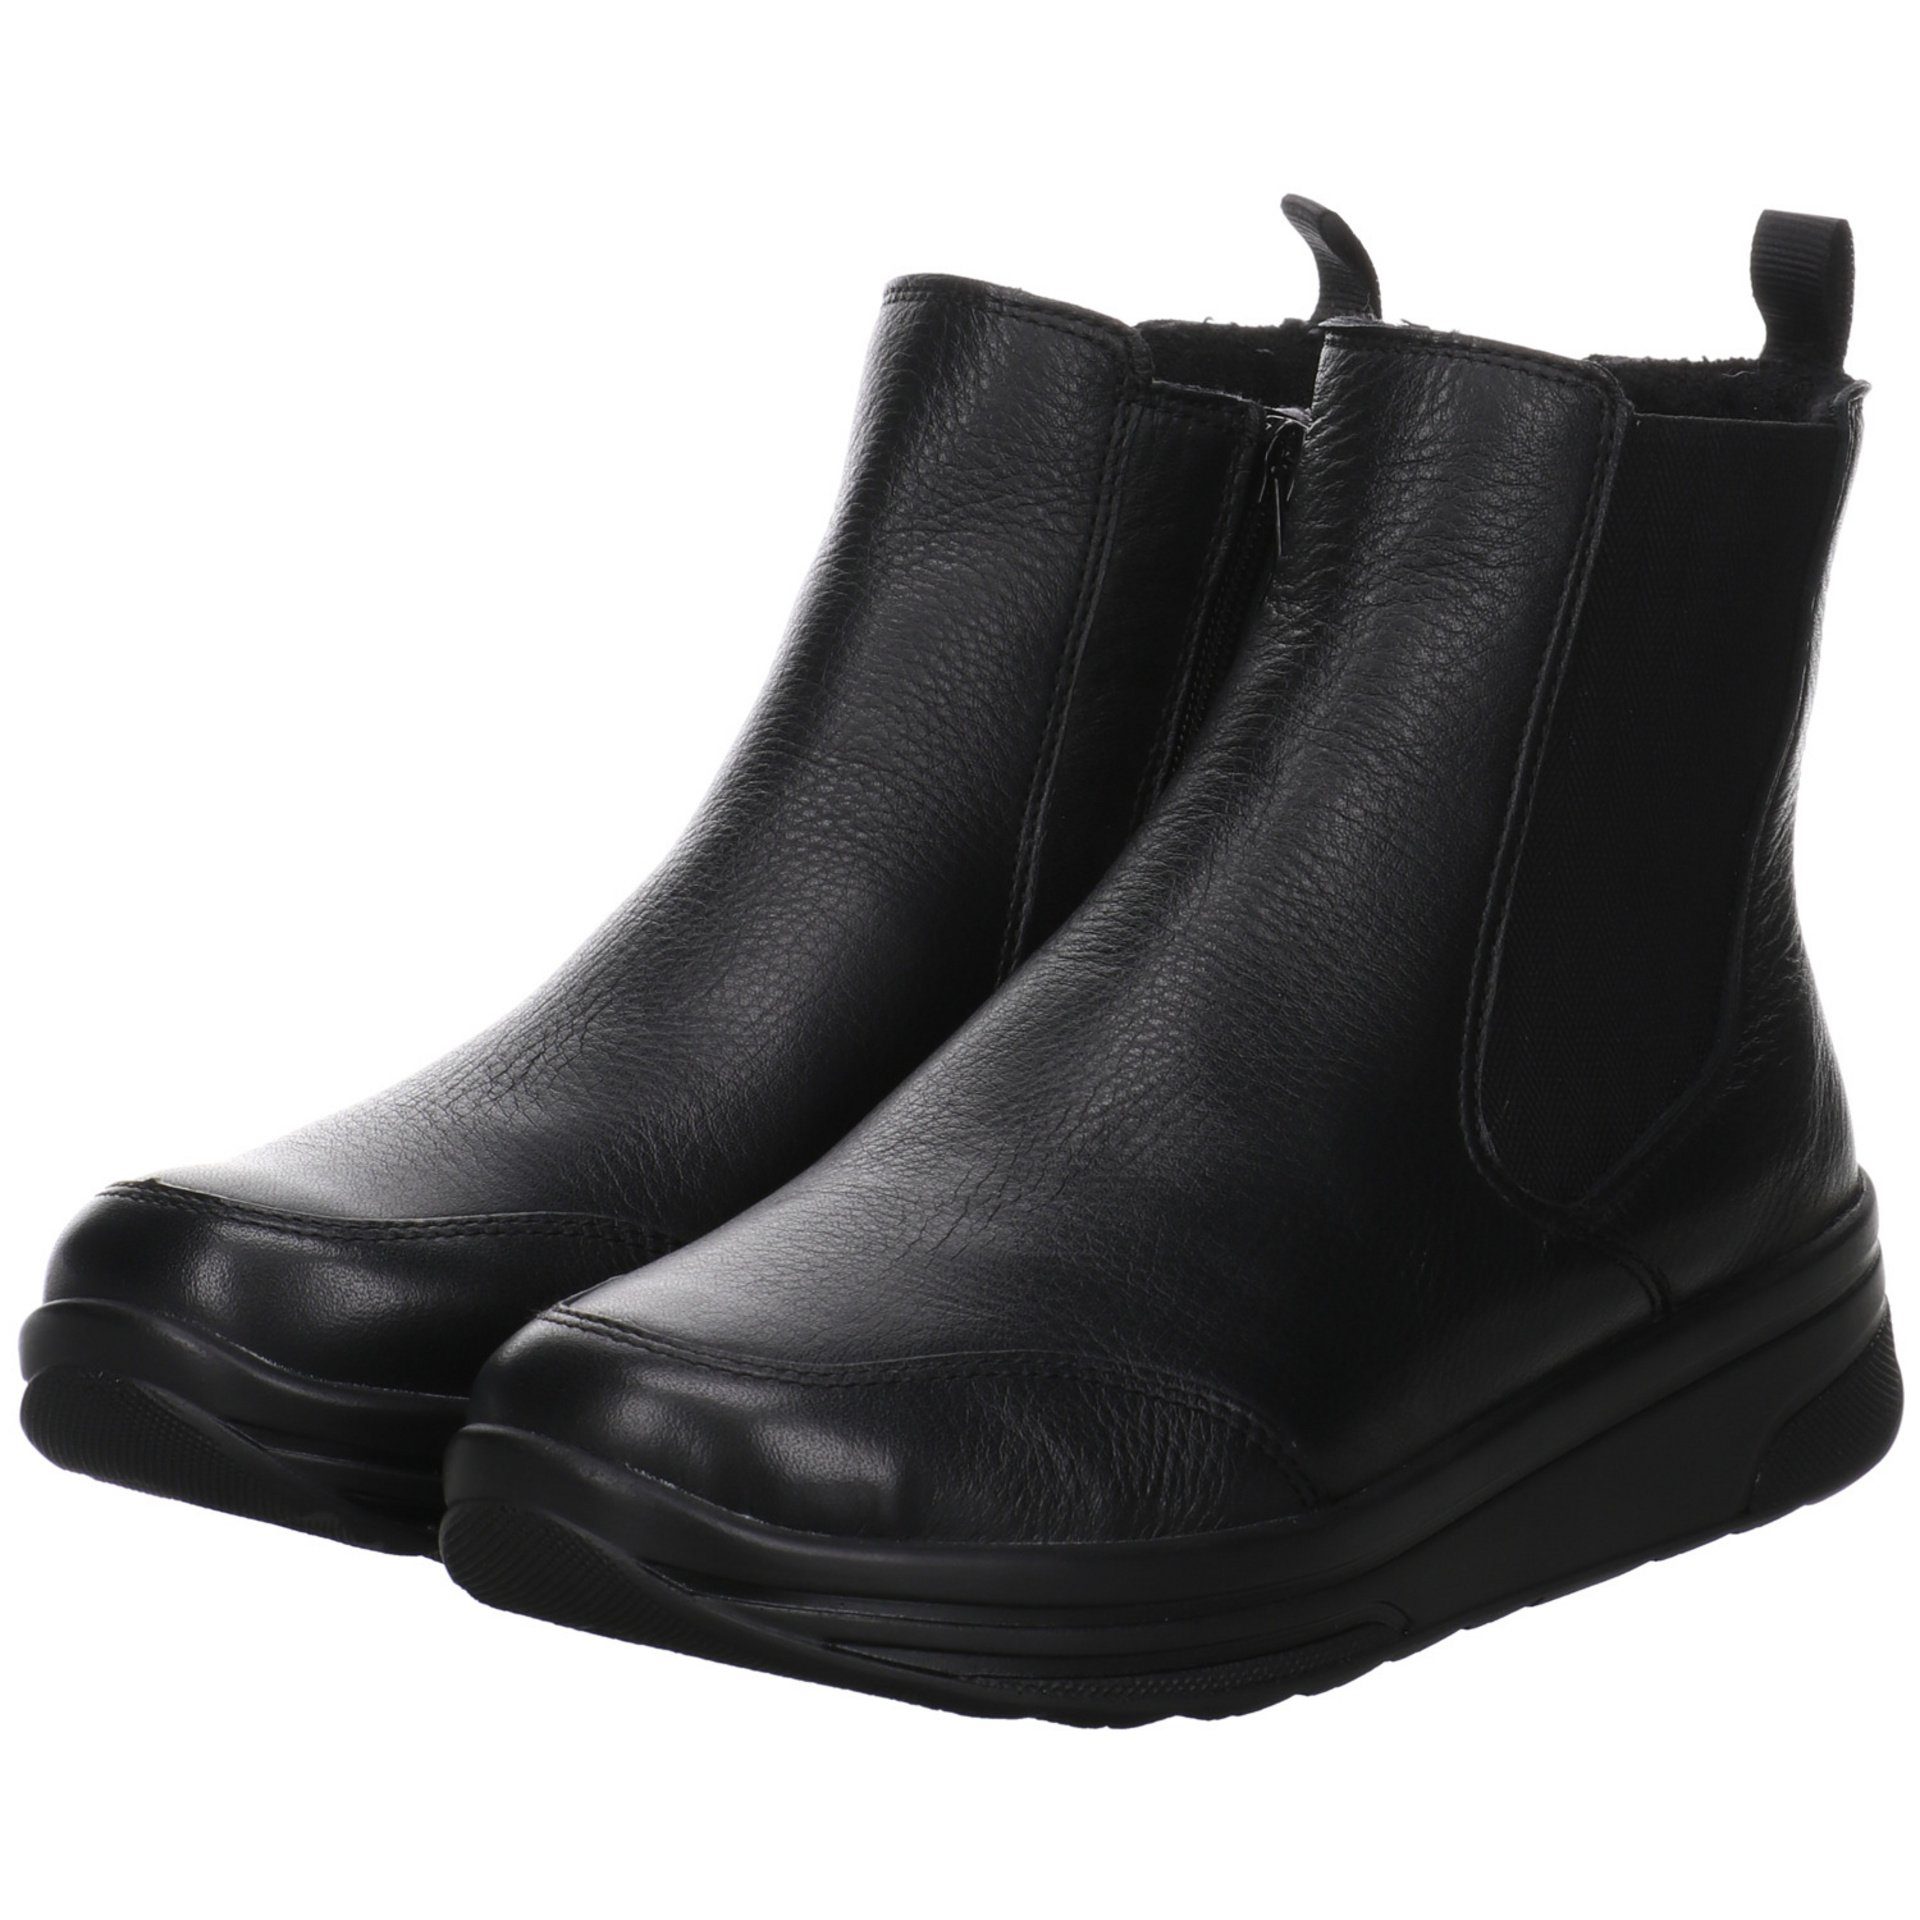 Ara 2.0 Sapporo-S Stiefelette Boots Damen Schuhe schwarz 046832 Glattleder Stiefel Chelsea